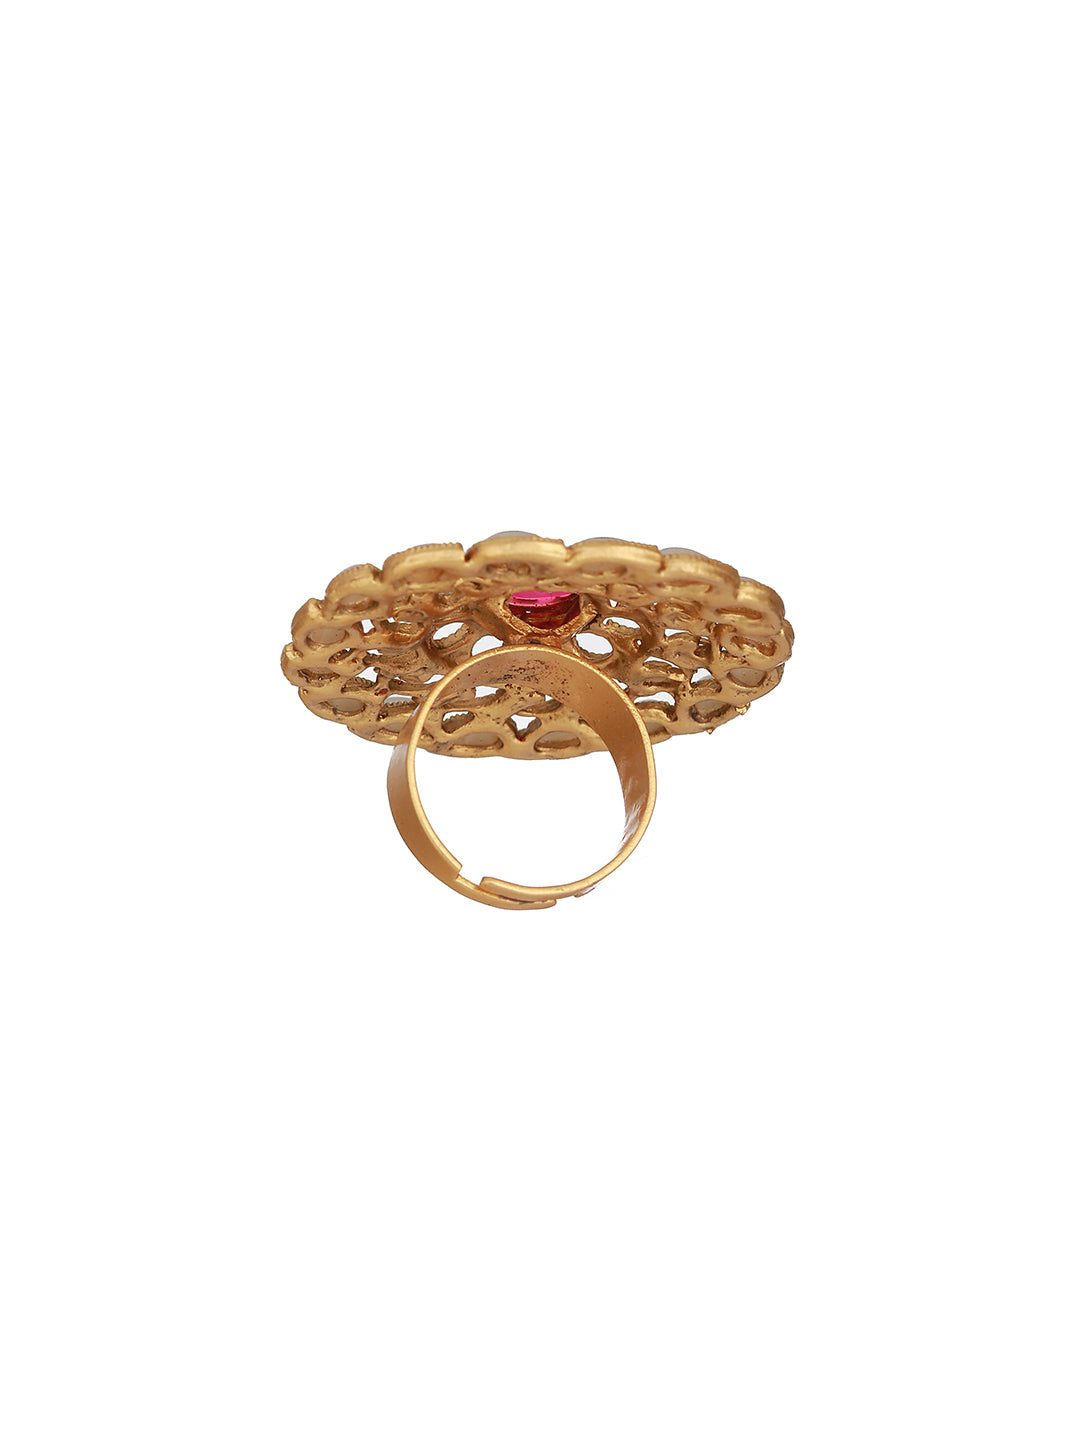 Jazz Abd Sizzle Gold Plated Red Stone Studded & Beaded Adjustable Finger Rings - Jazzandsizzle